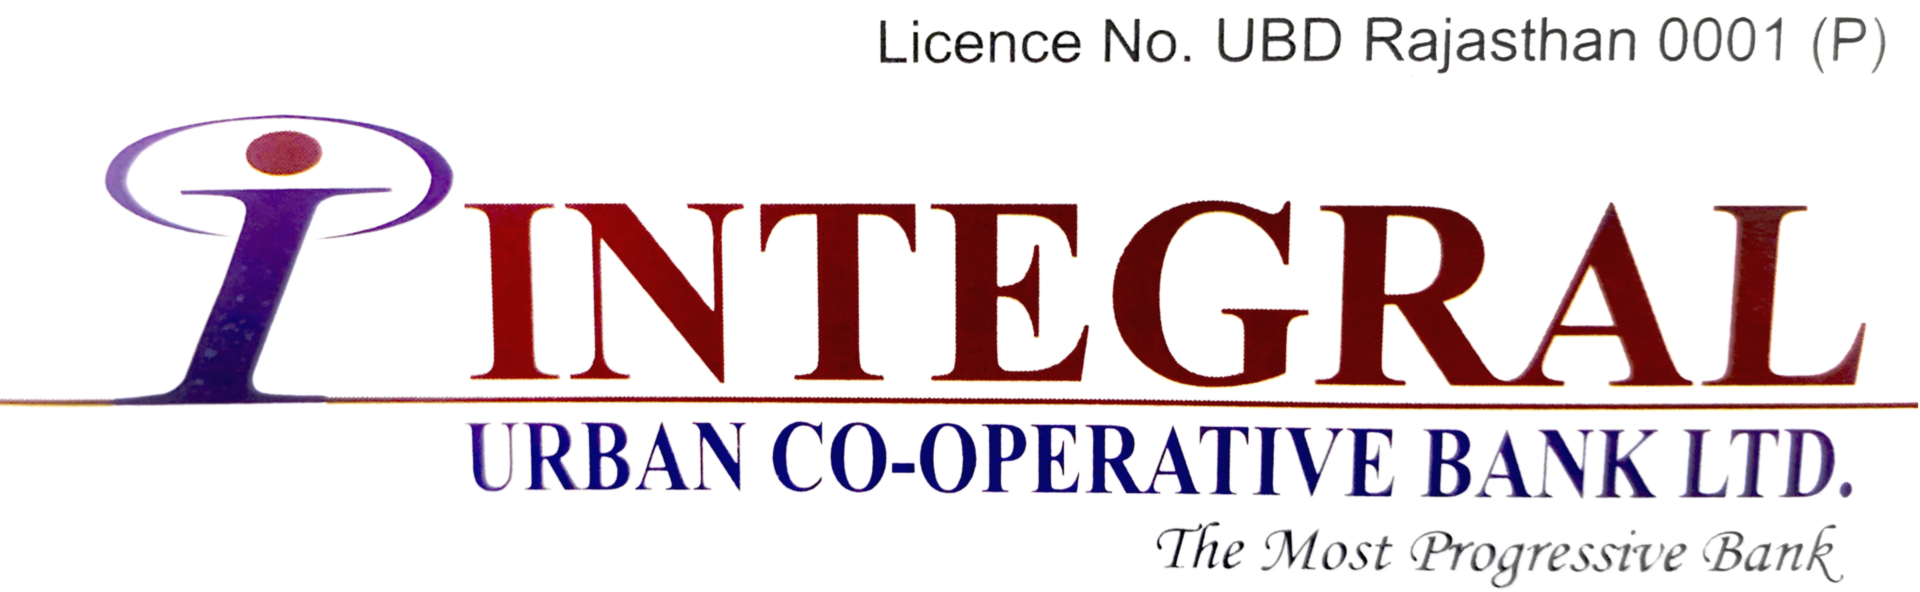 Integral Urban Co-operative bank